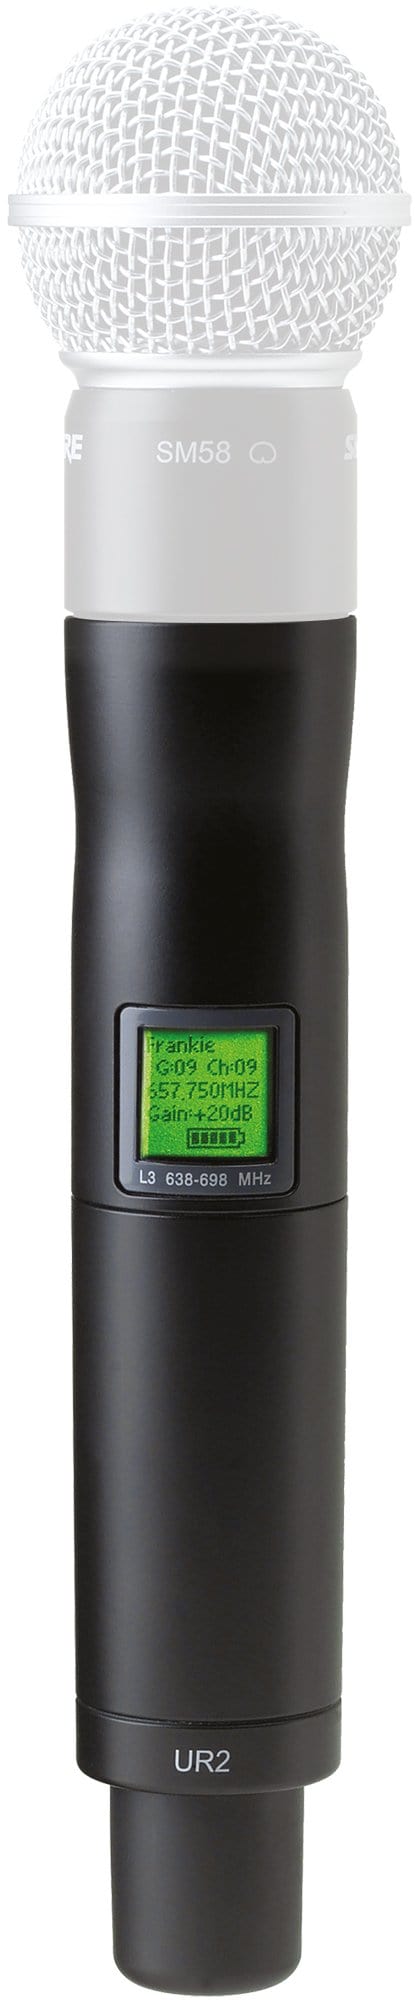 Shure UR2G1 UHF Handheld Wireless Mic 470-530 Mhz - ProSound and Stage Lighting